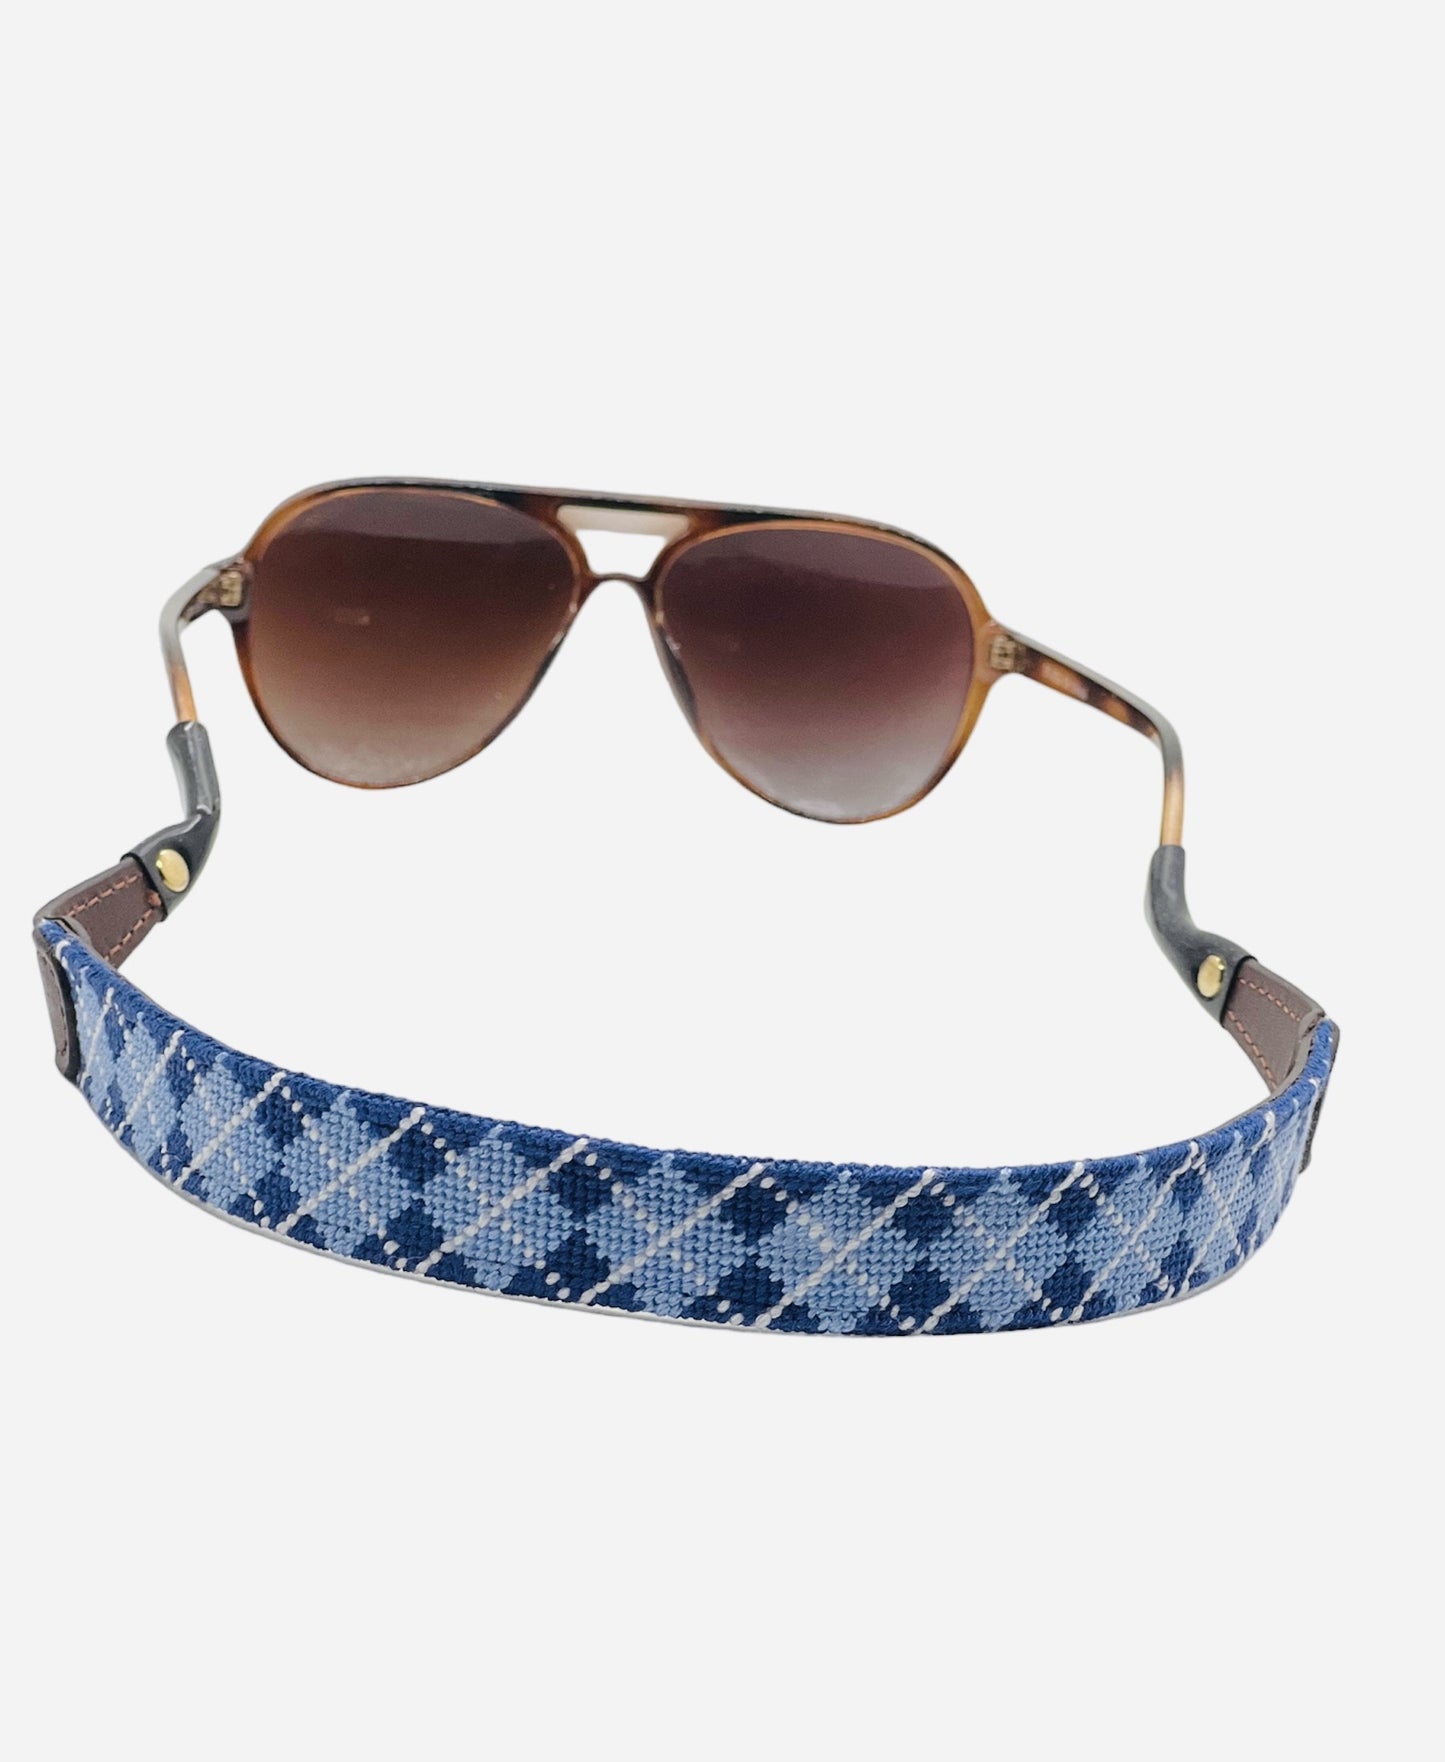 Carolina Blue and Navy Needlepoint Argyle Sunglasses Straps by Mimi and Co.